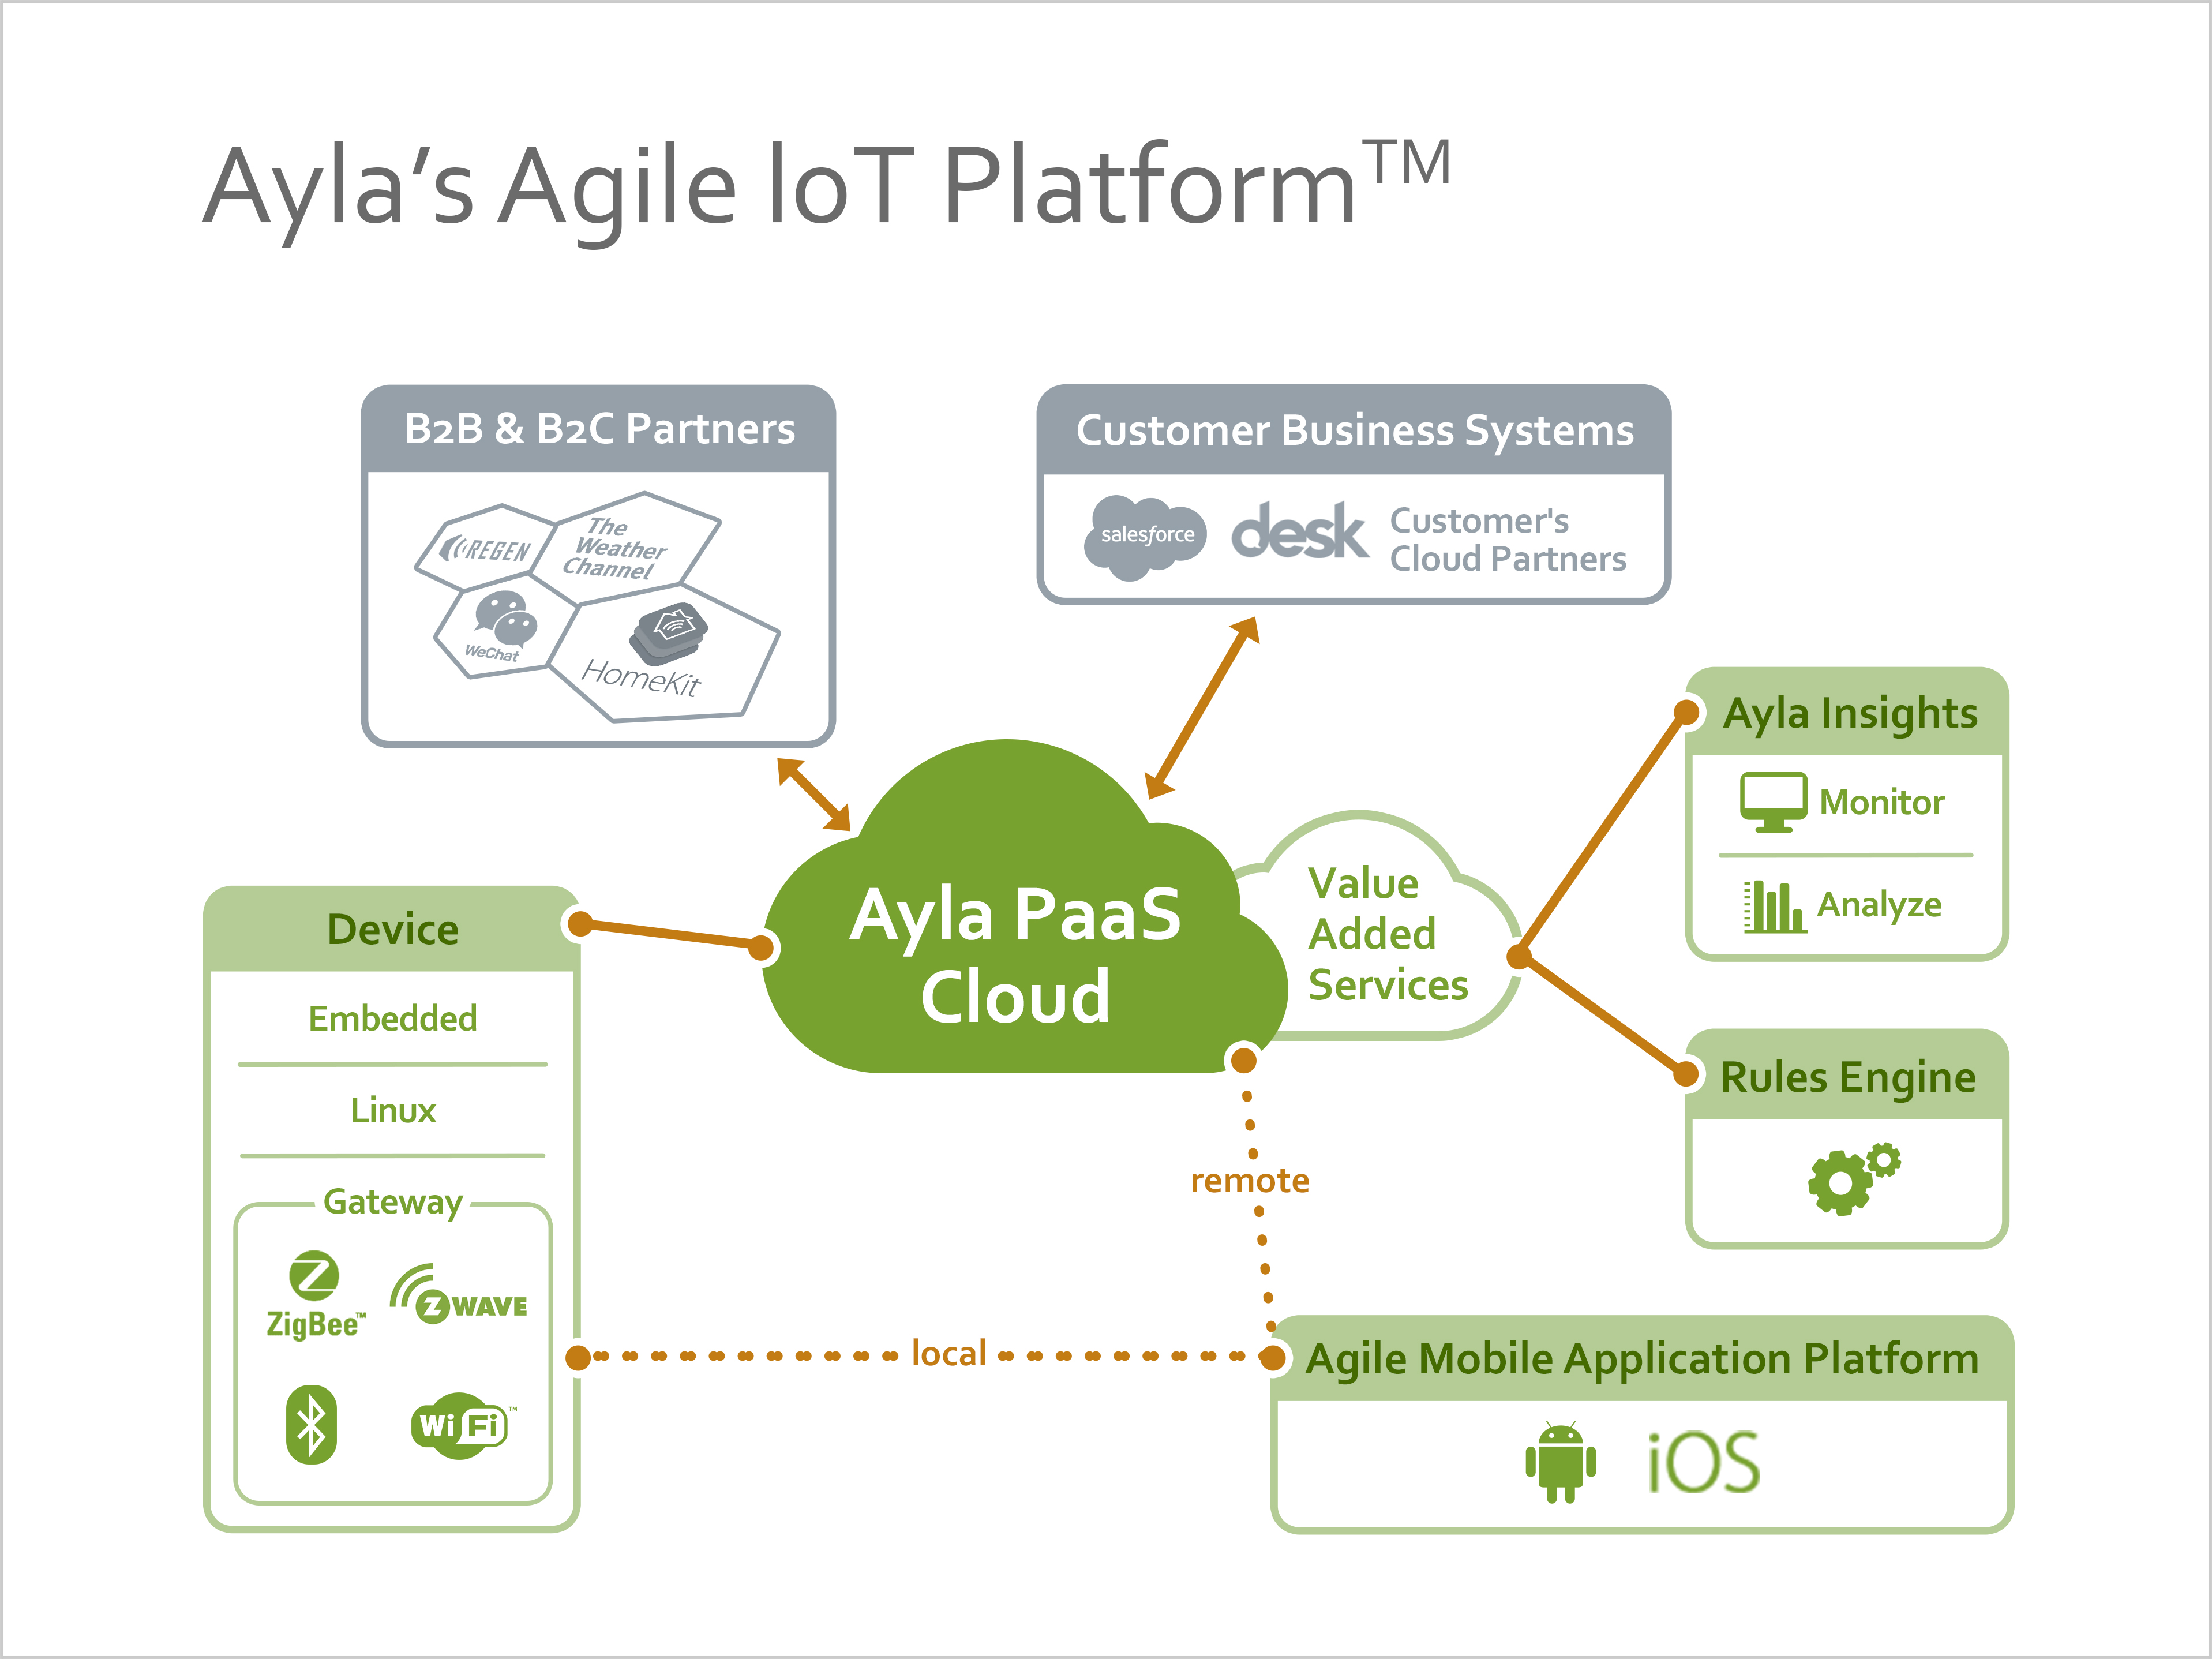 Ayla's Agile IoT Platform™